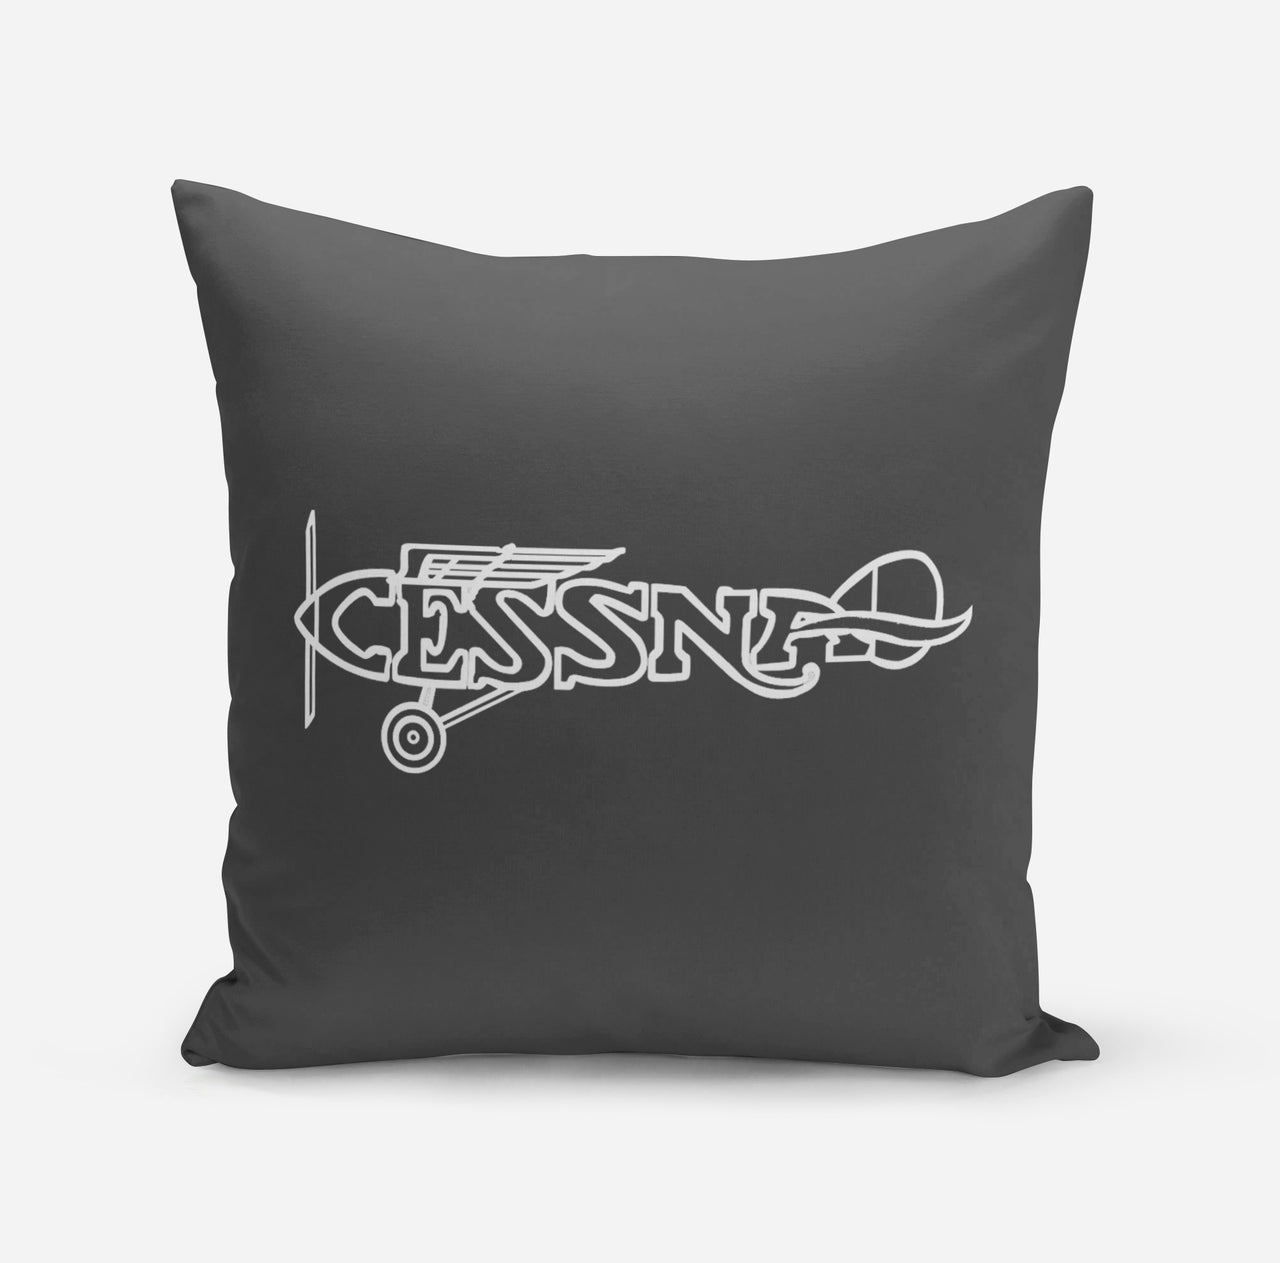 Special Cessna Text Designed Pillows